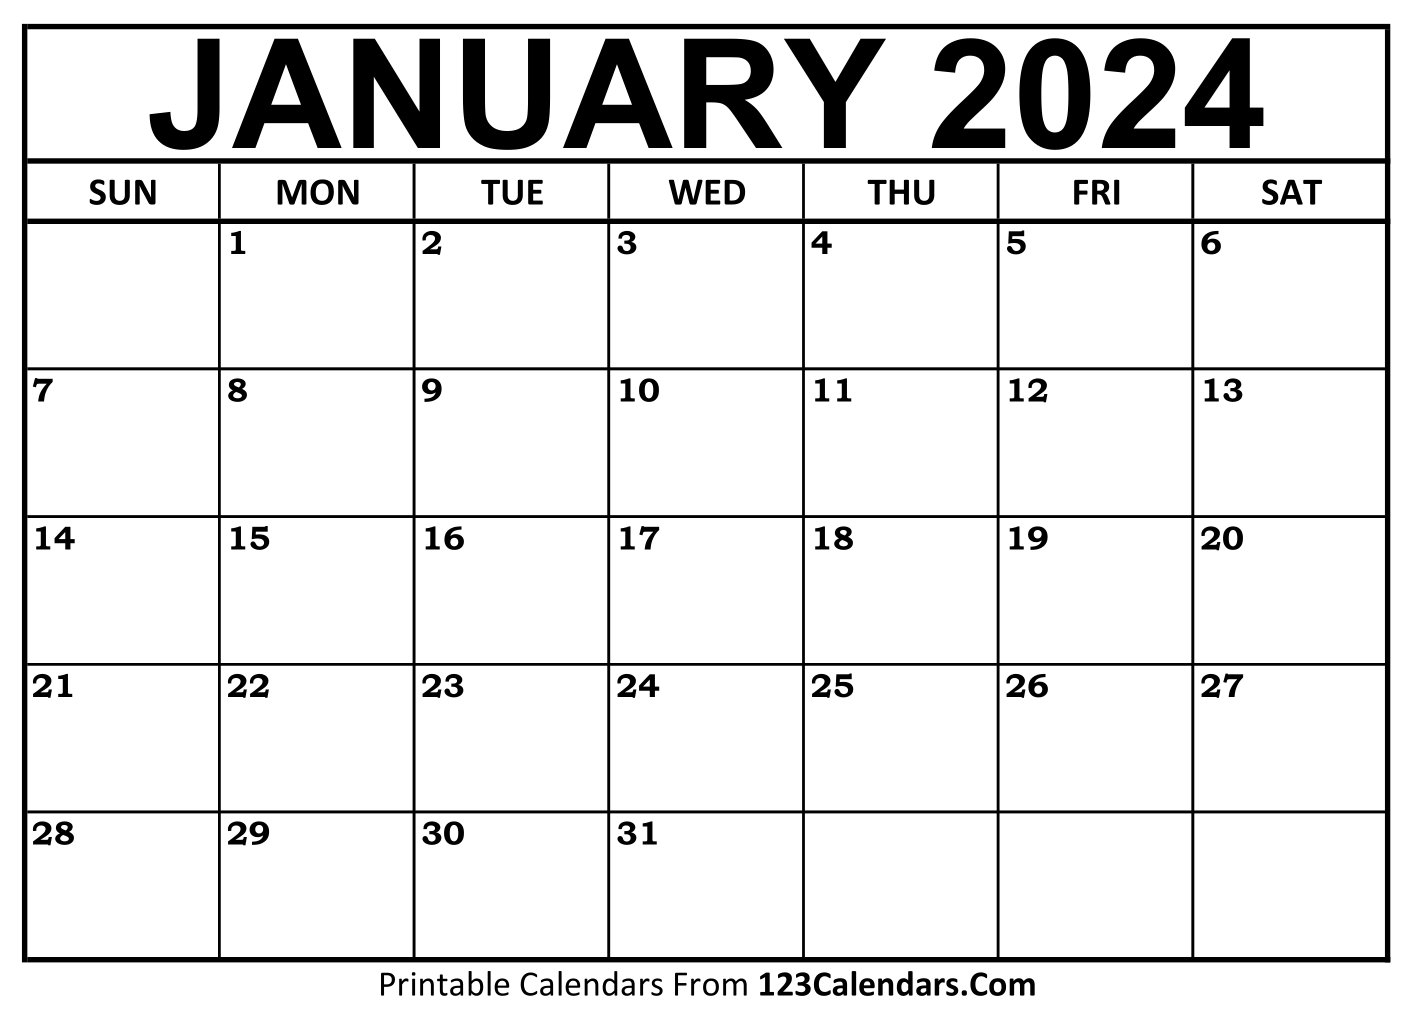 Printable January 2024 Calendar Templates - 123Calendars for Printable January 2024 Calendar